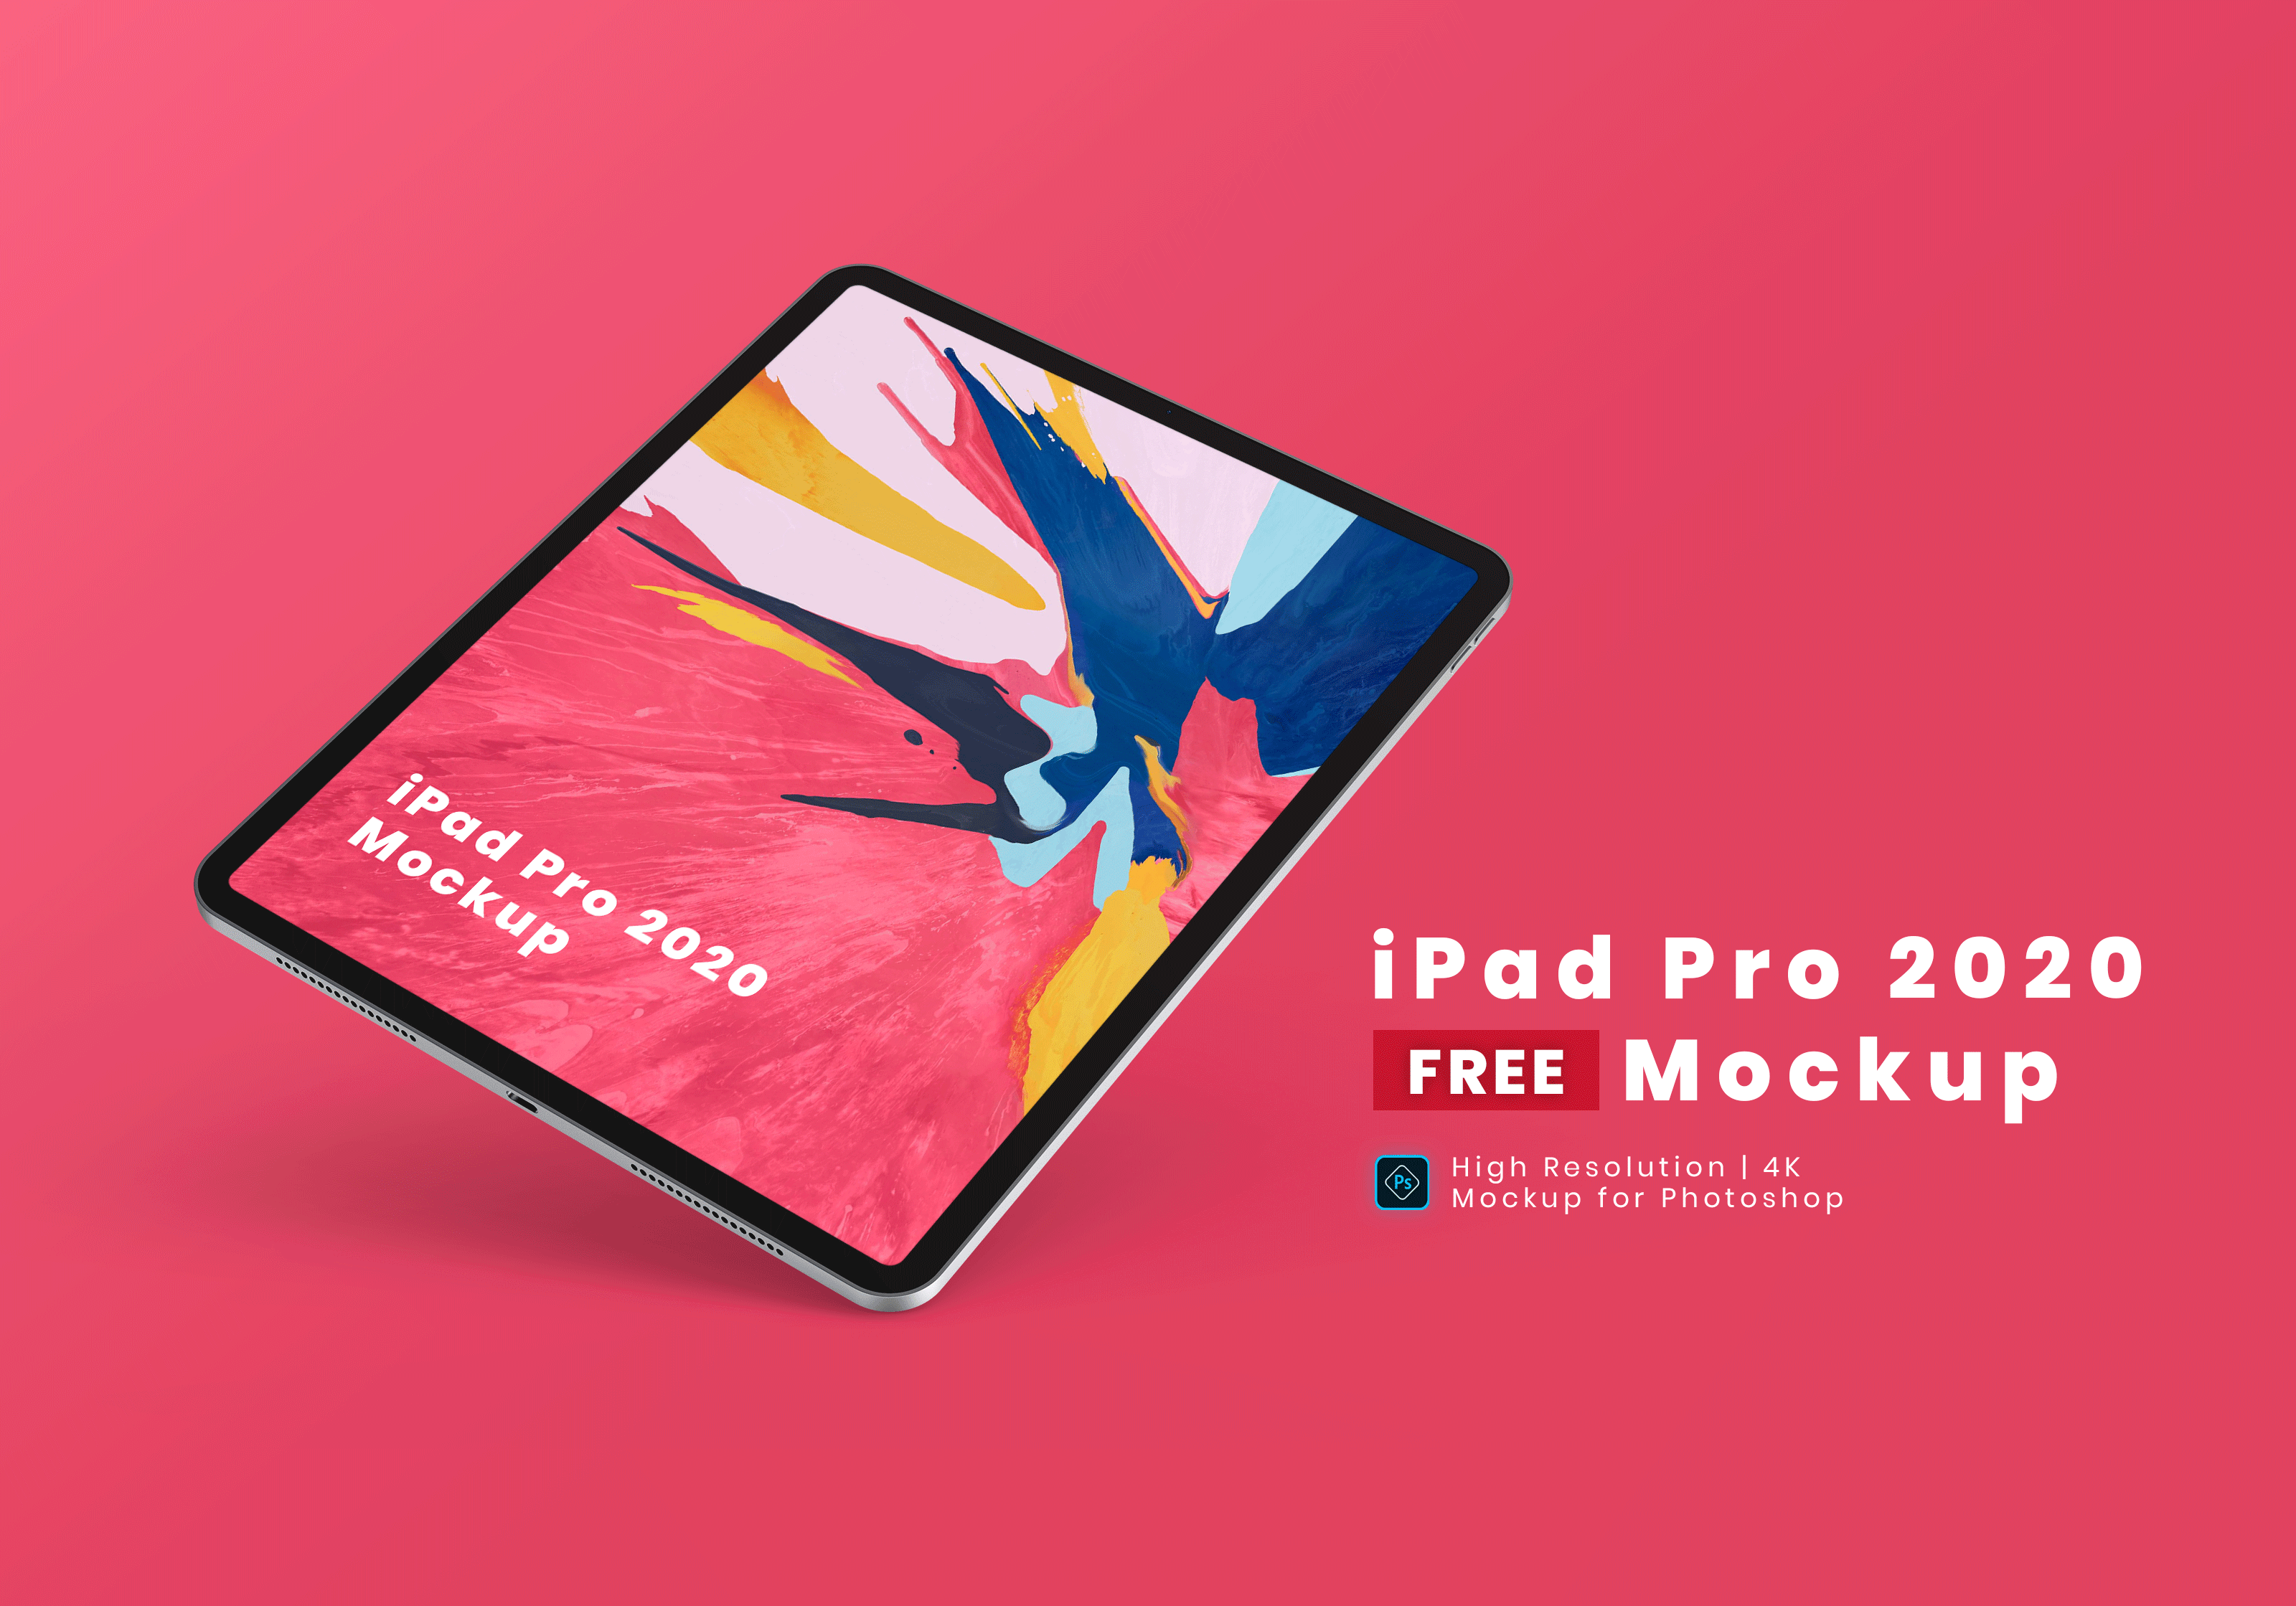 iPad Pro Free Mockup 2020